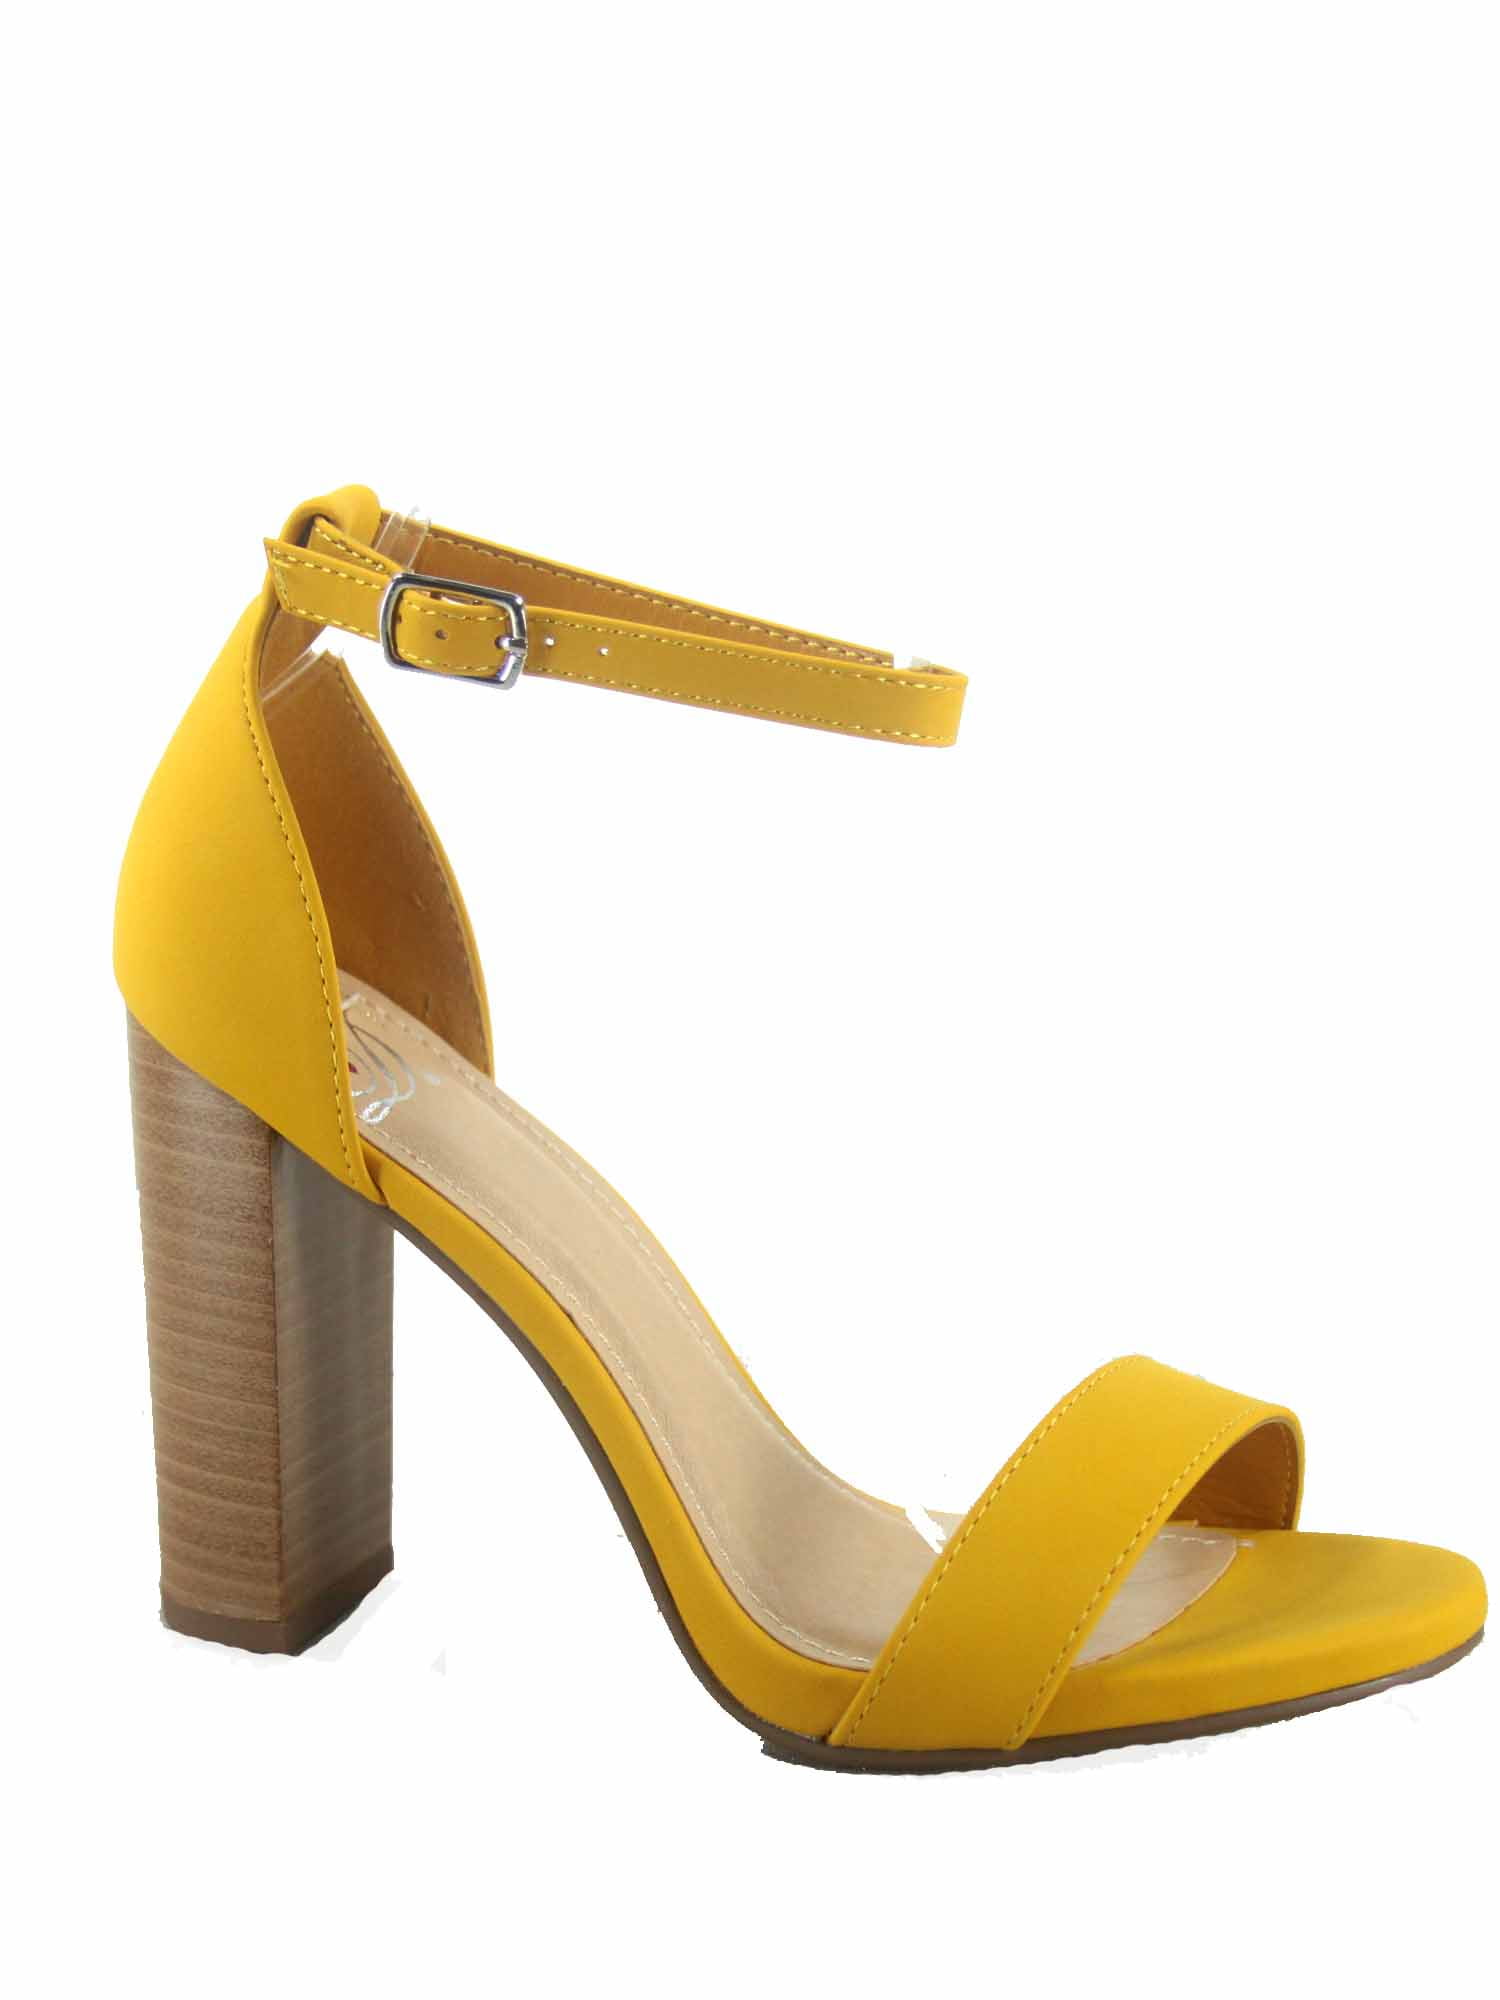 small yellow heels